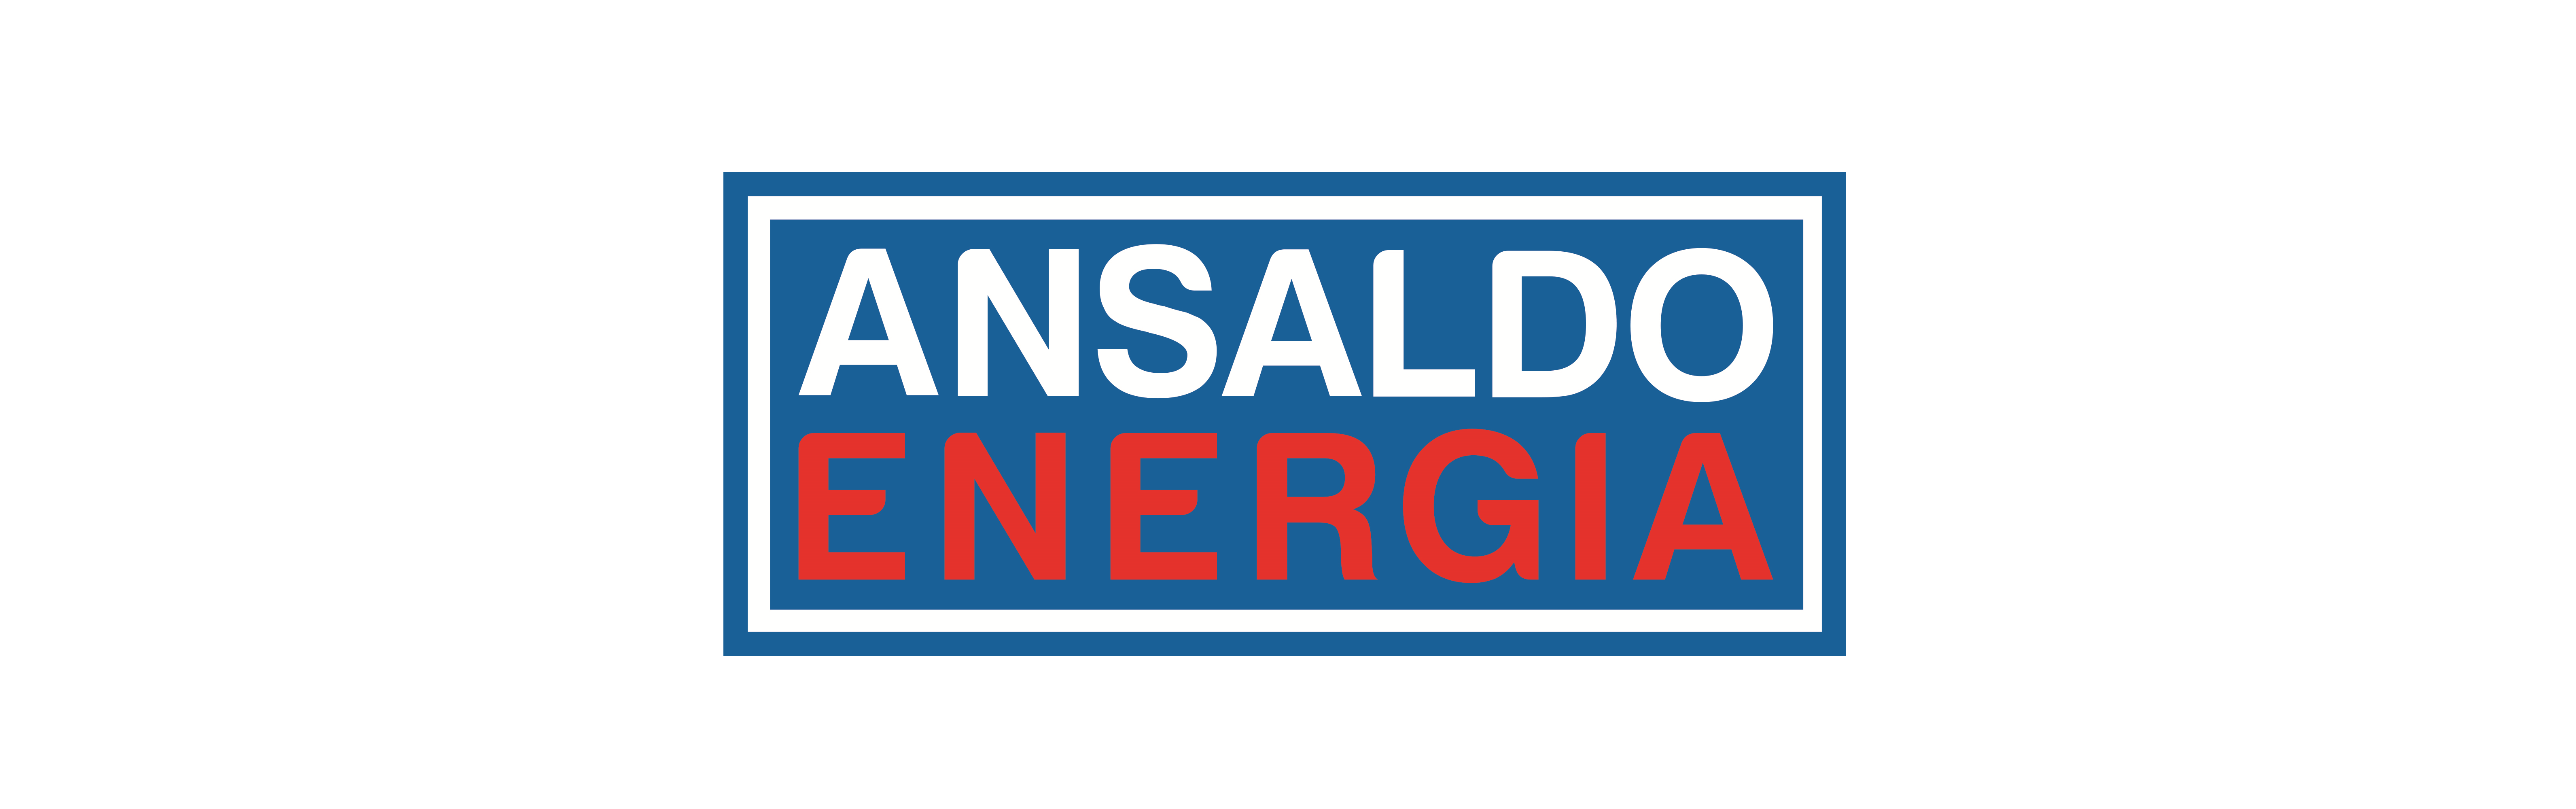 ANSALDO-ENERGIA.png